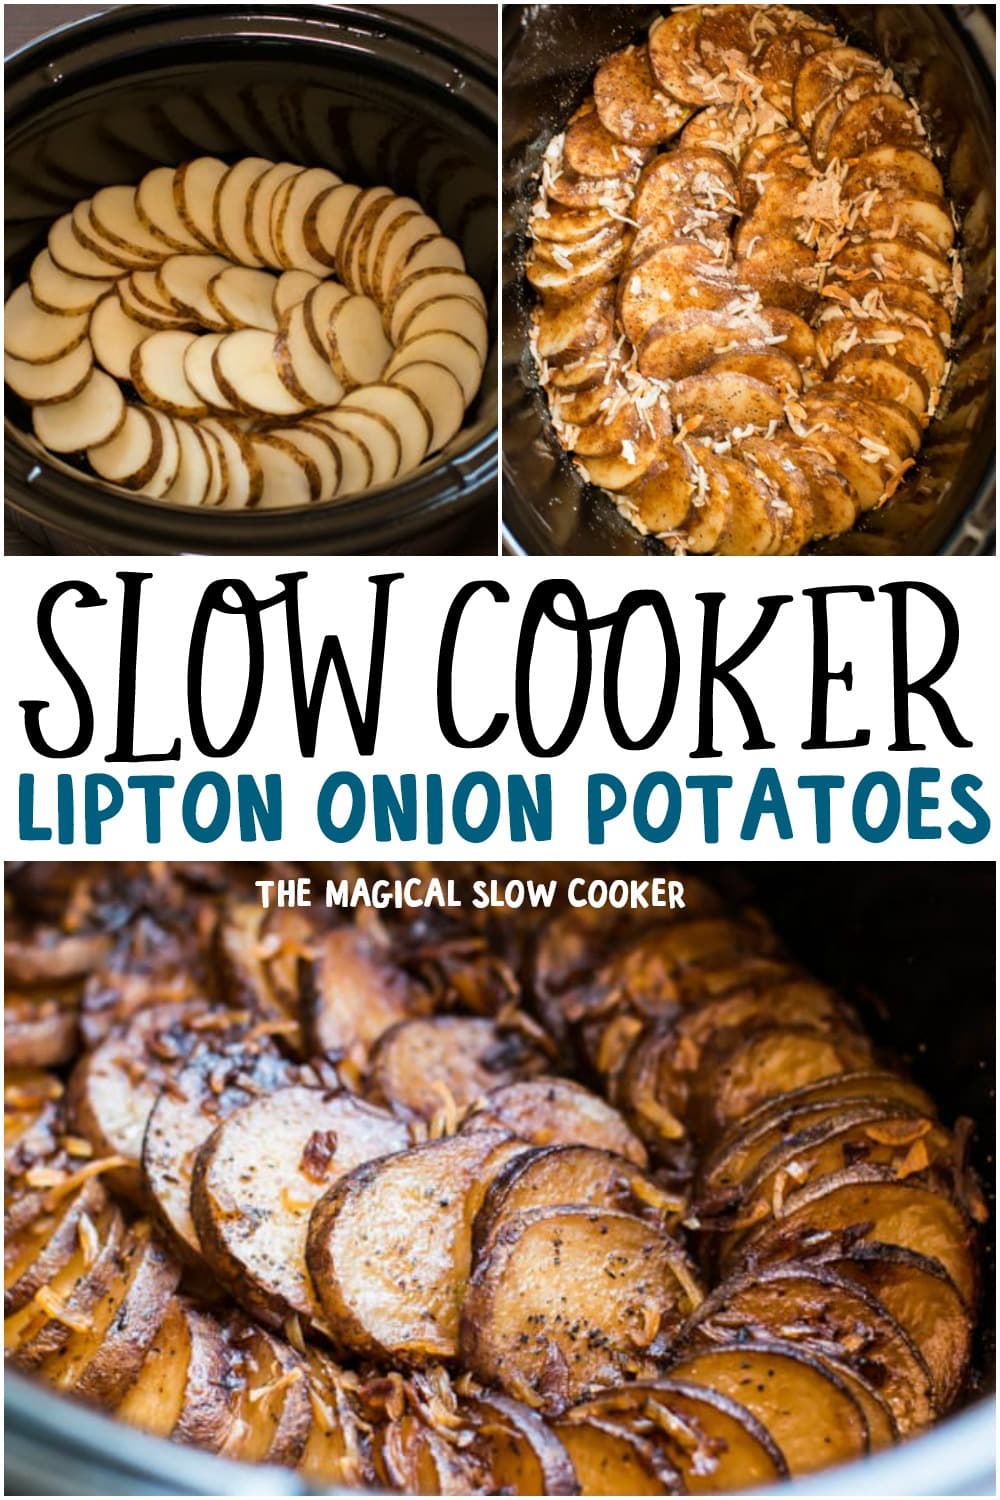 Lipton Onion Potatoes